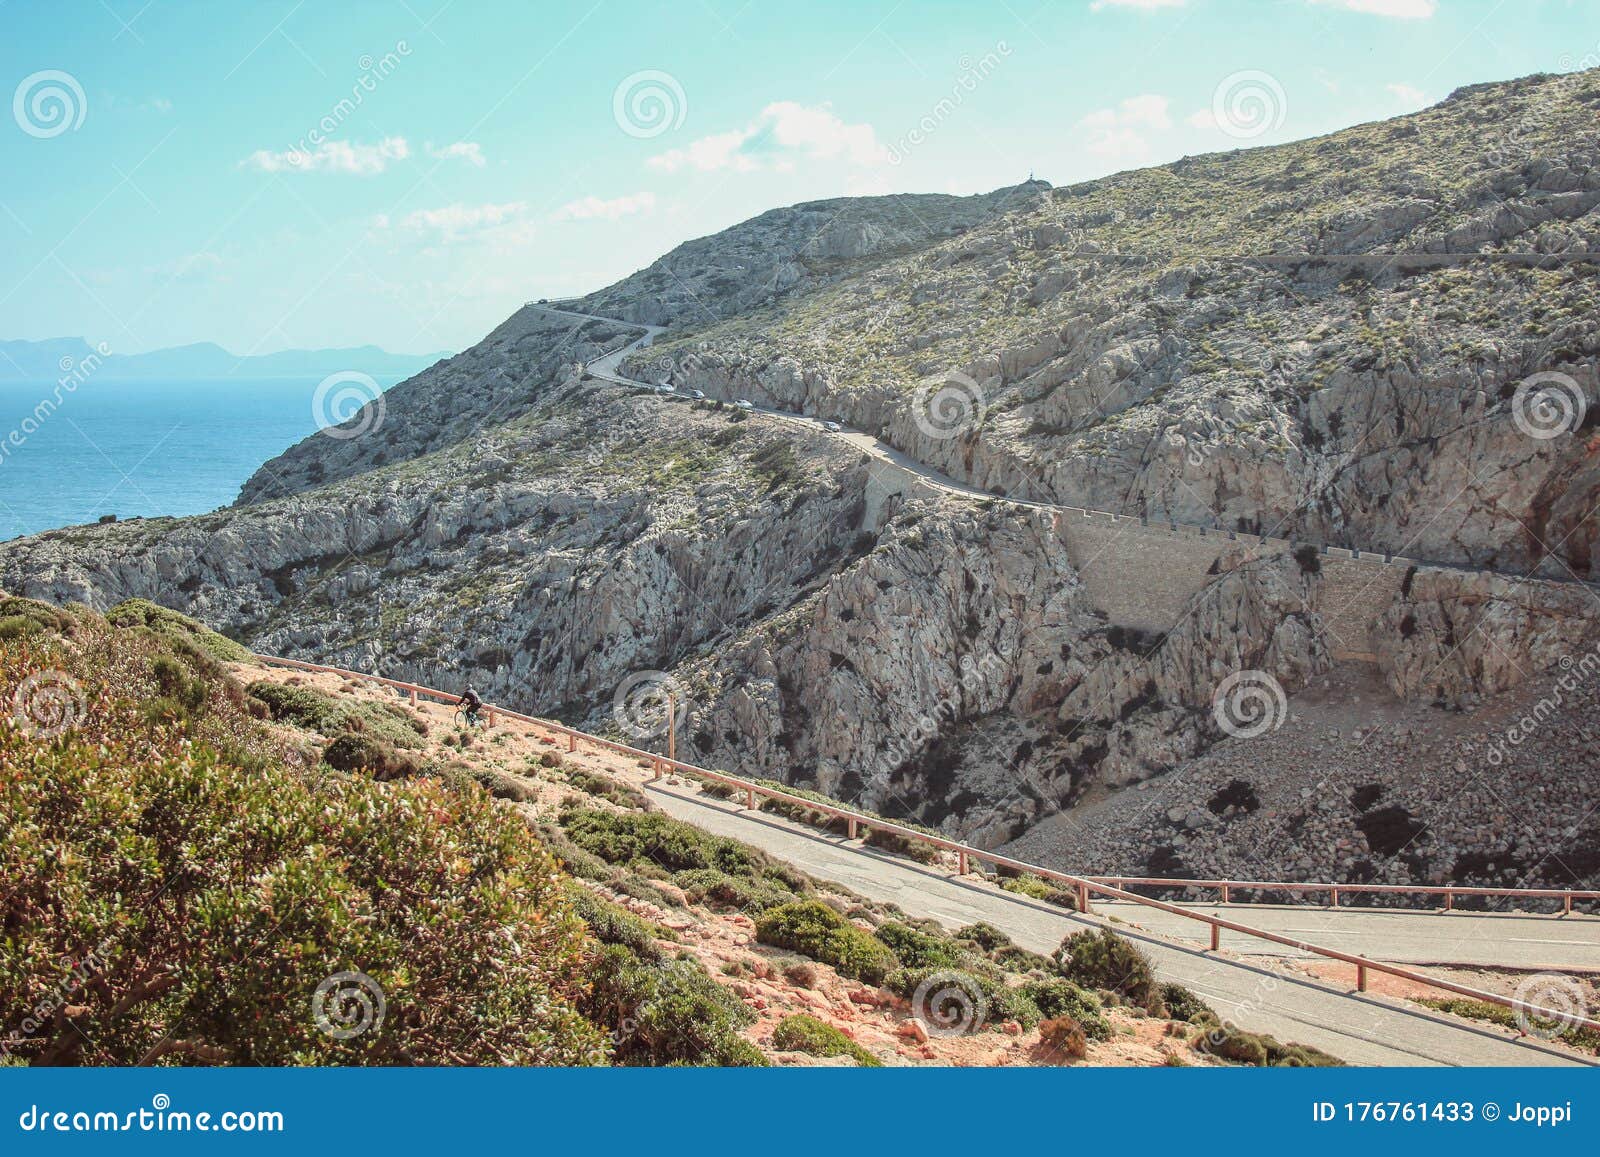 winding road through serra de tramuntana, view from cap de formentor in mallorca, spain